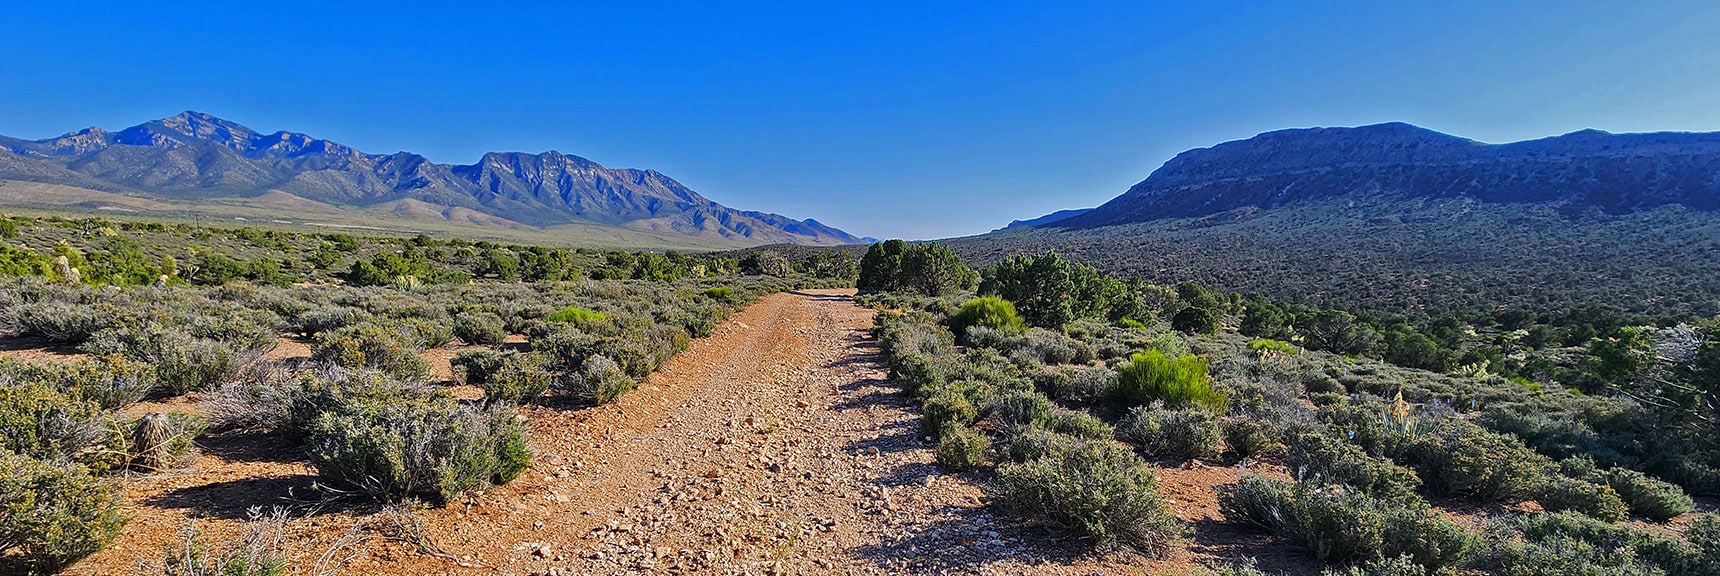 Roads Begin to Appear Less Than 1/4th Mile from Start/End Point | Mt Wilson to Hidden Peak | Upper Crest Ridgeline | Rainbow Mountain Wilderness, Nevada